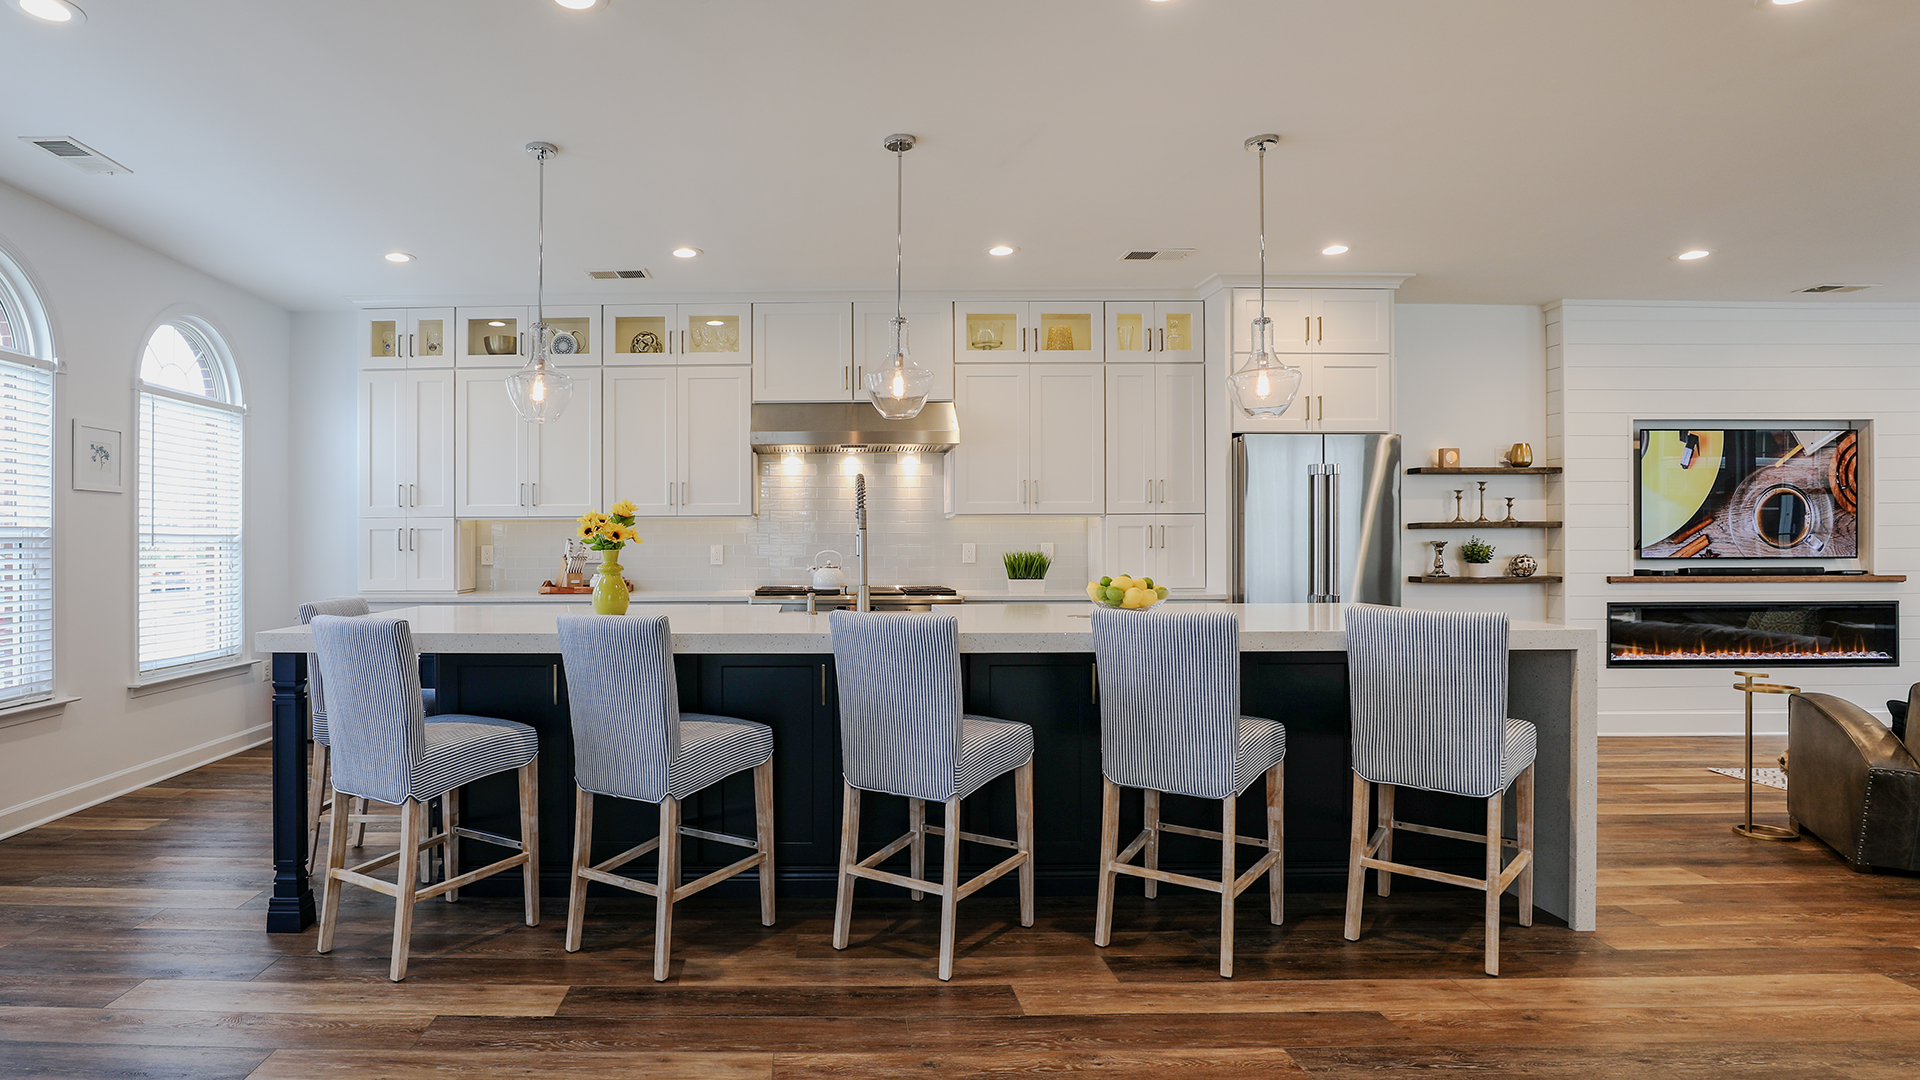 2022 PRO Mid Atlantic Remodeler of the Year, Merit Award Residential Kitchen $50,000 – $100,000